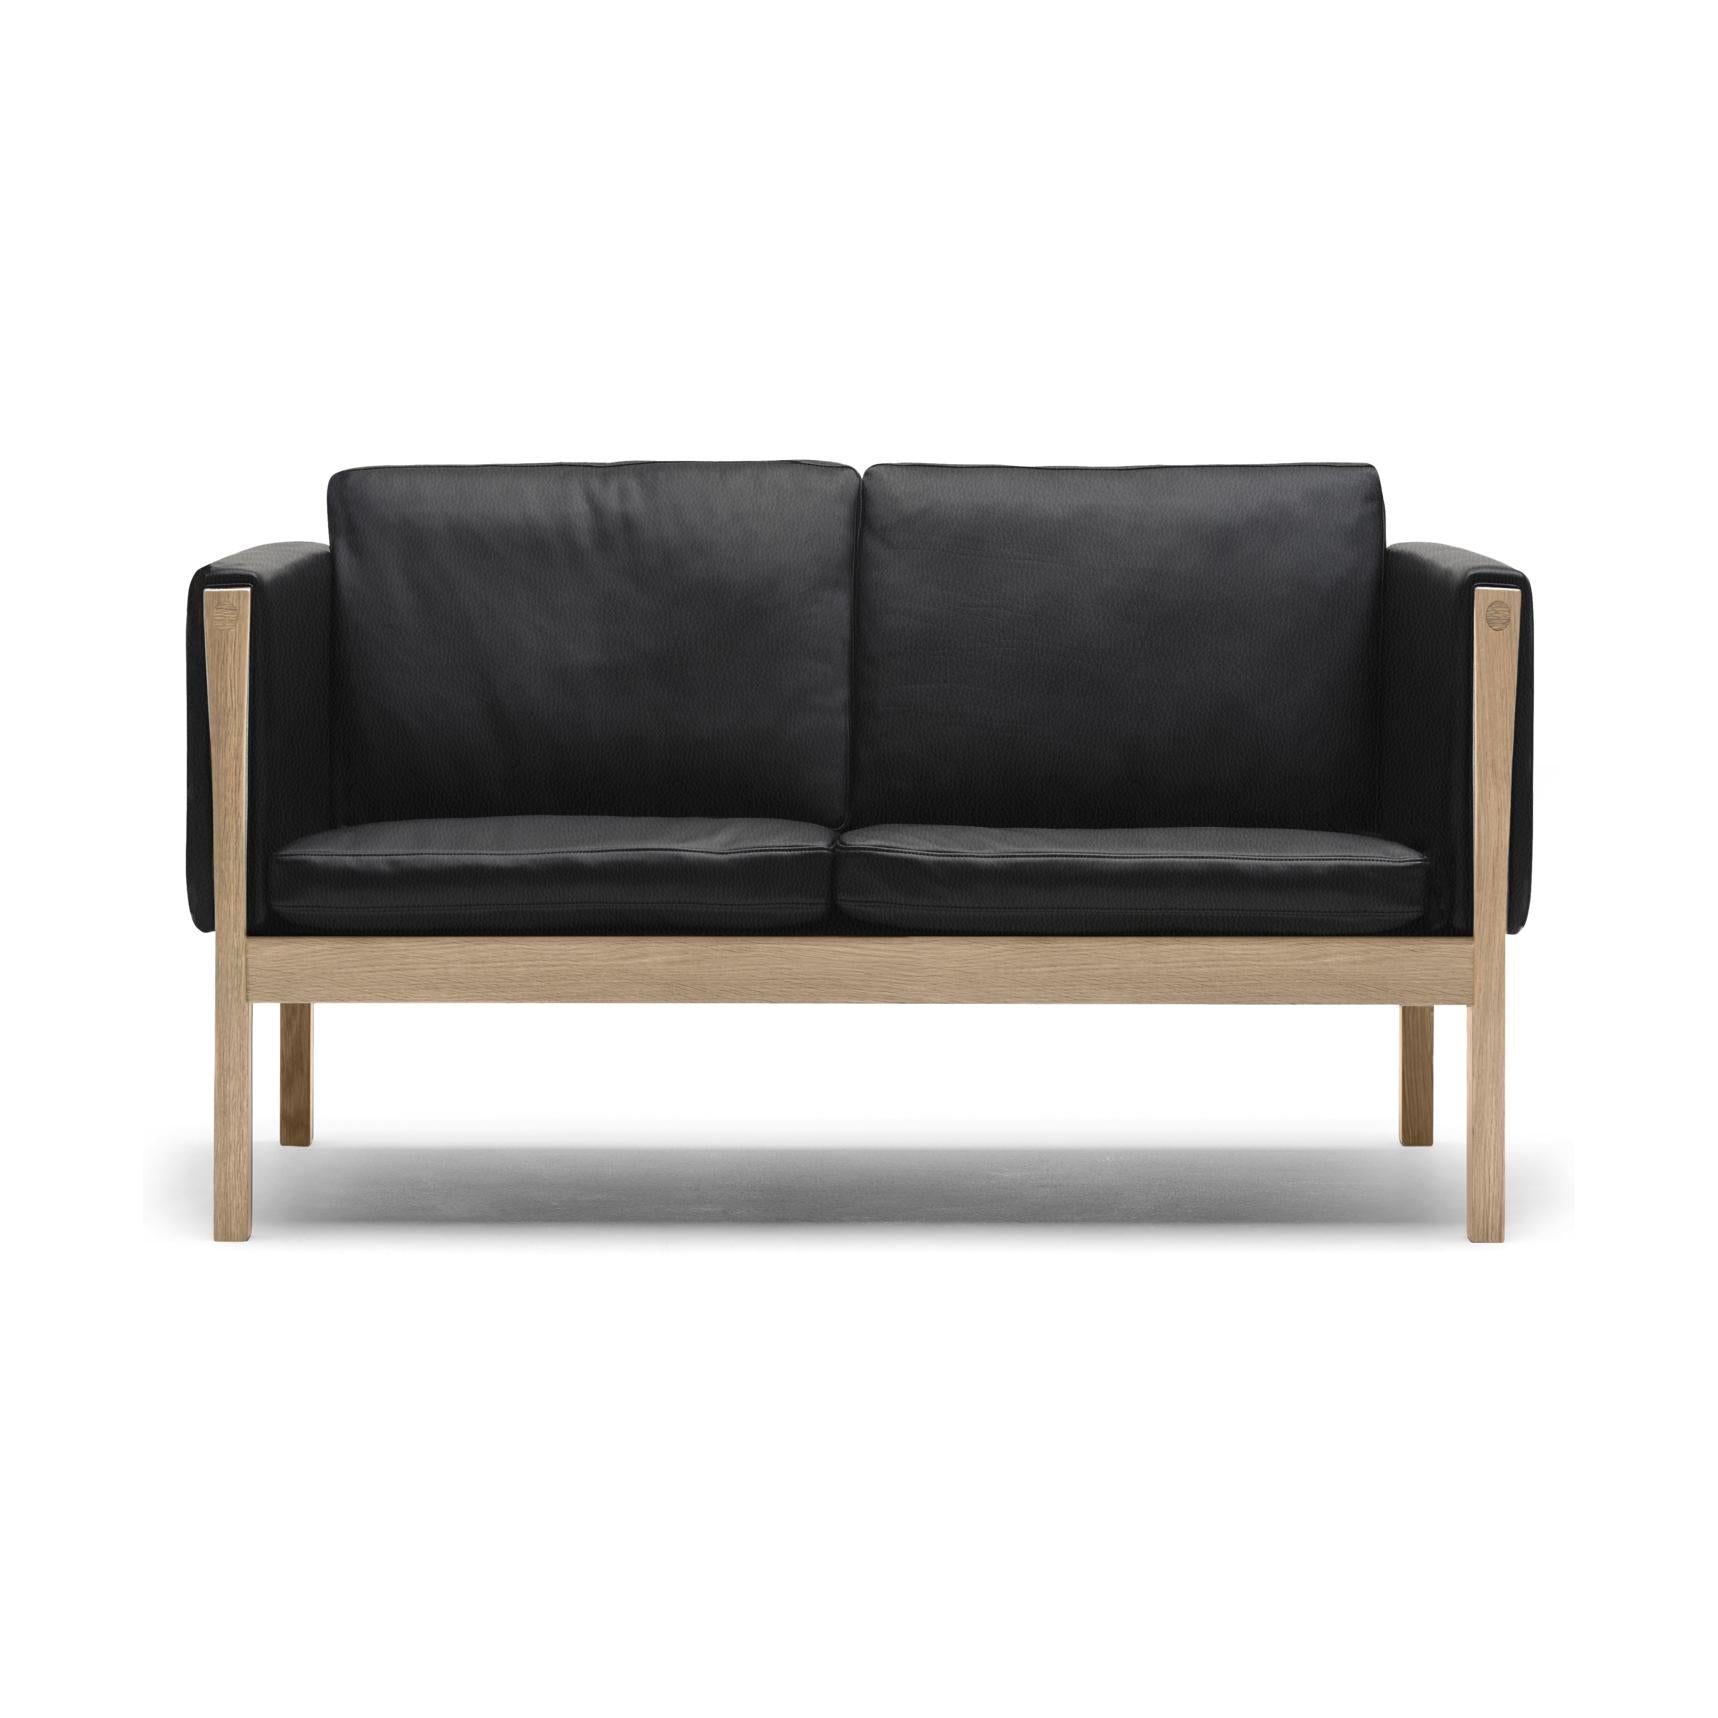 Carl Hansen CH162 soffa, oljat ek/ svart läder